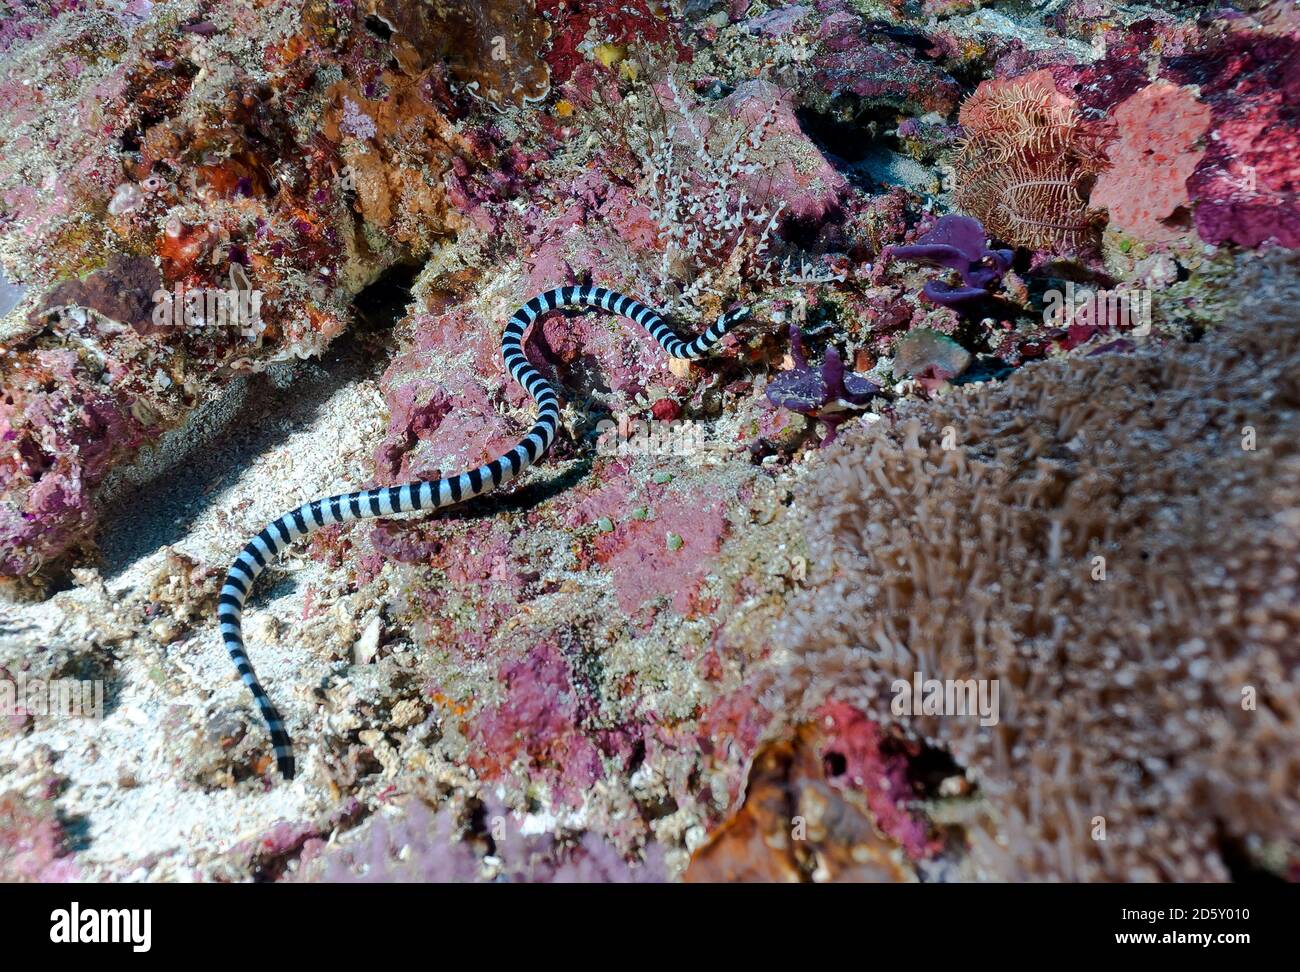 Indonesia, Bali, Nusa Lembongan, serpiente marina de banda débil, Hydrophis belcheri Foto de stock